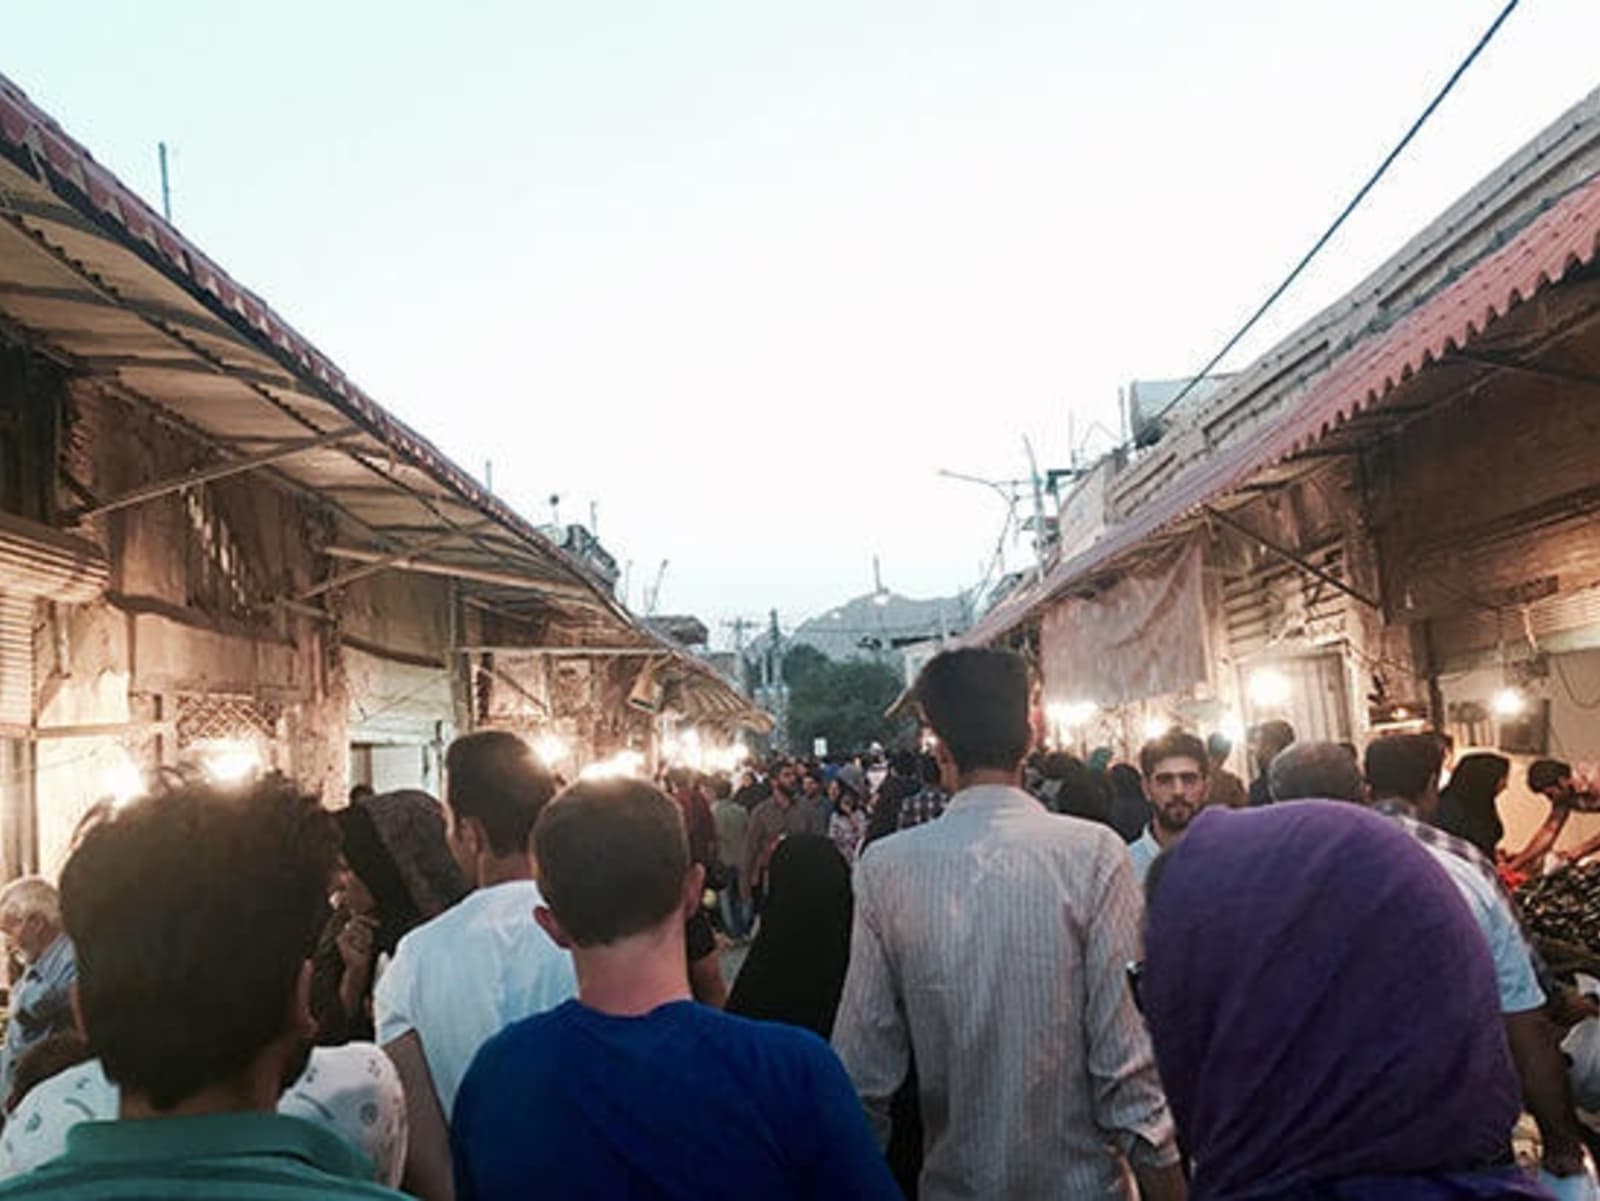 RS-Bazaar-in-the-Ganjali-Khan-Complex-Kerman.jpg